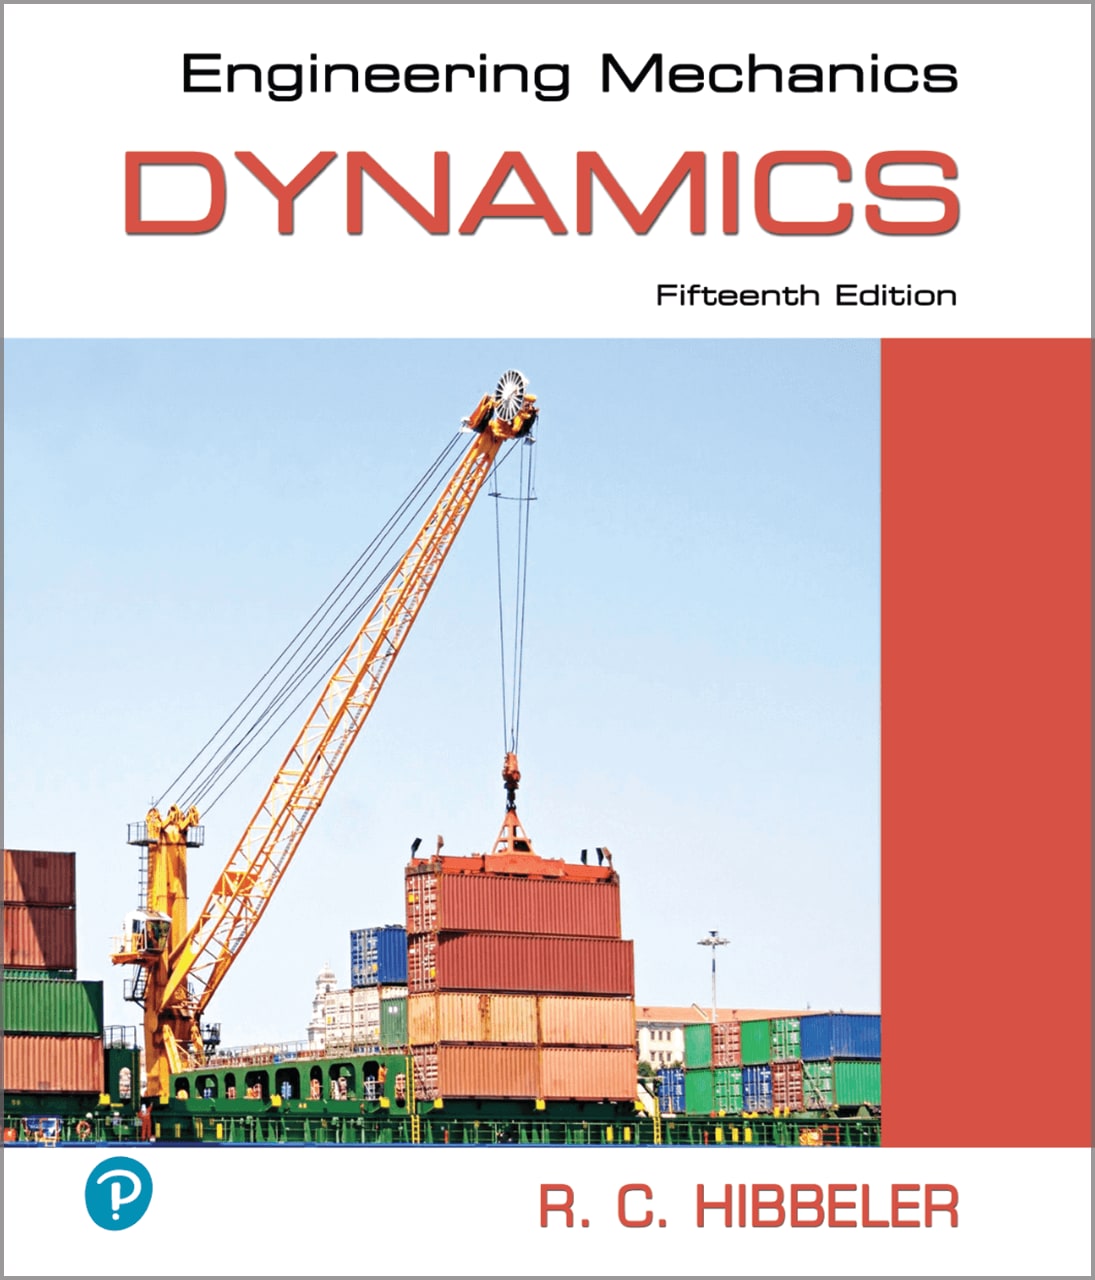 Engineering Mechanics: Dynamics, 15th Edition book cover